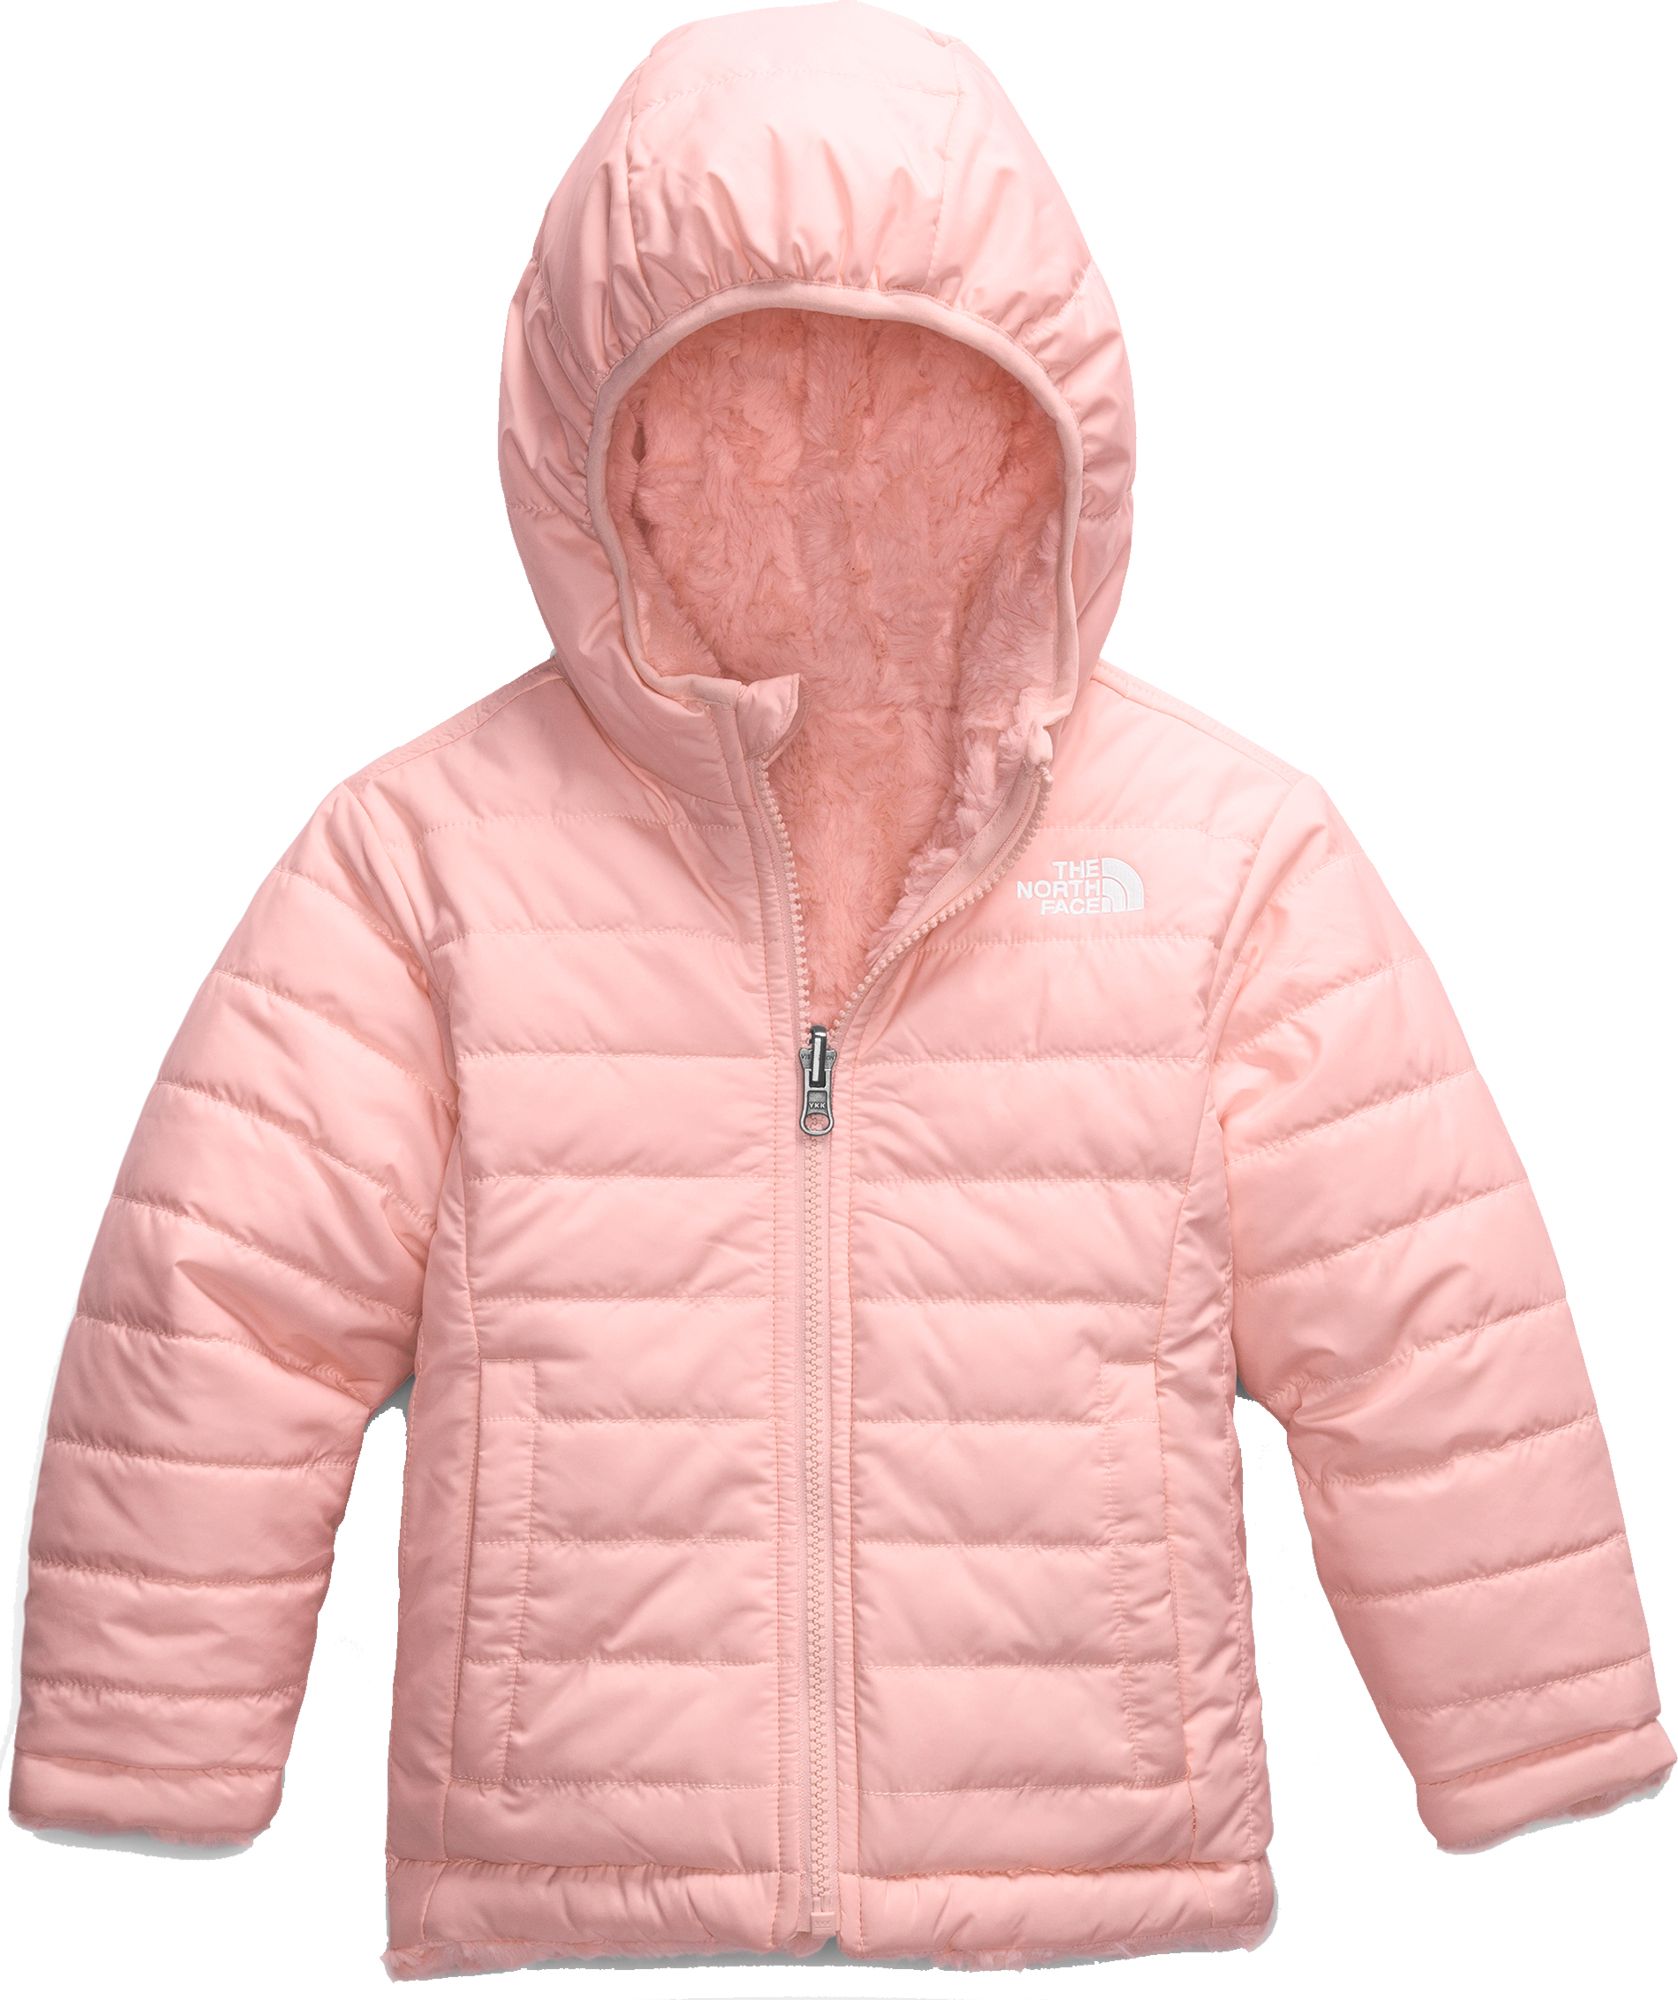 northface winter coats toddler girl